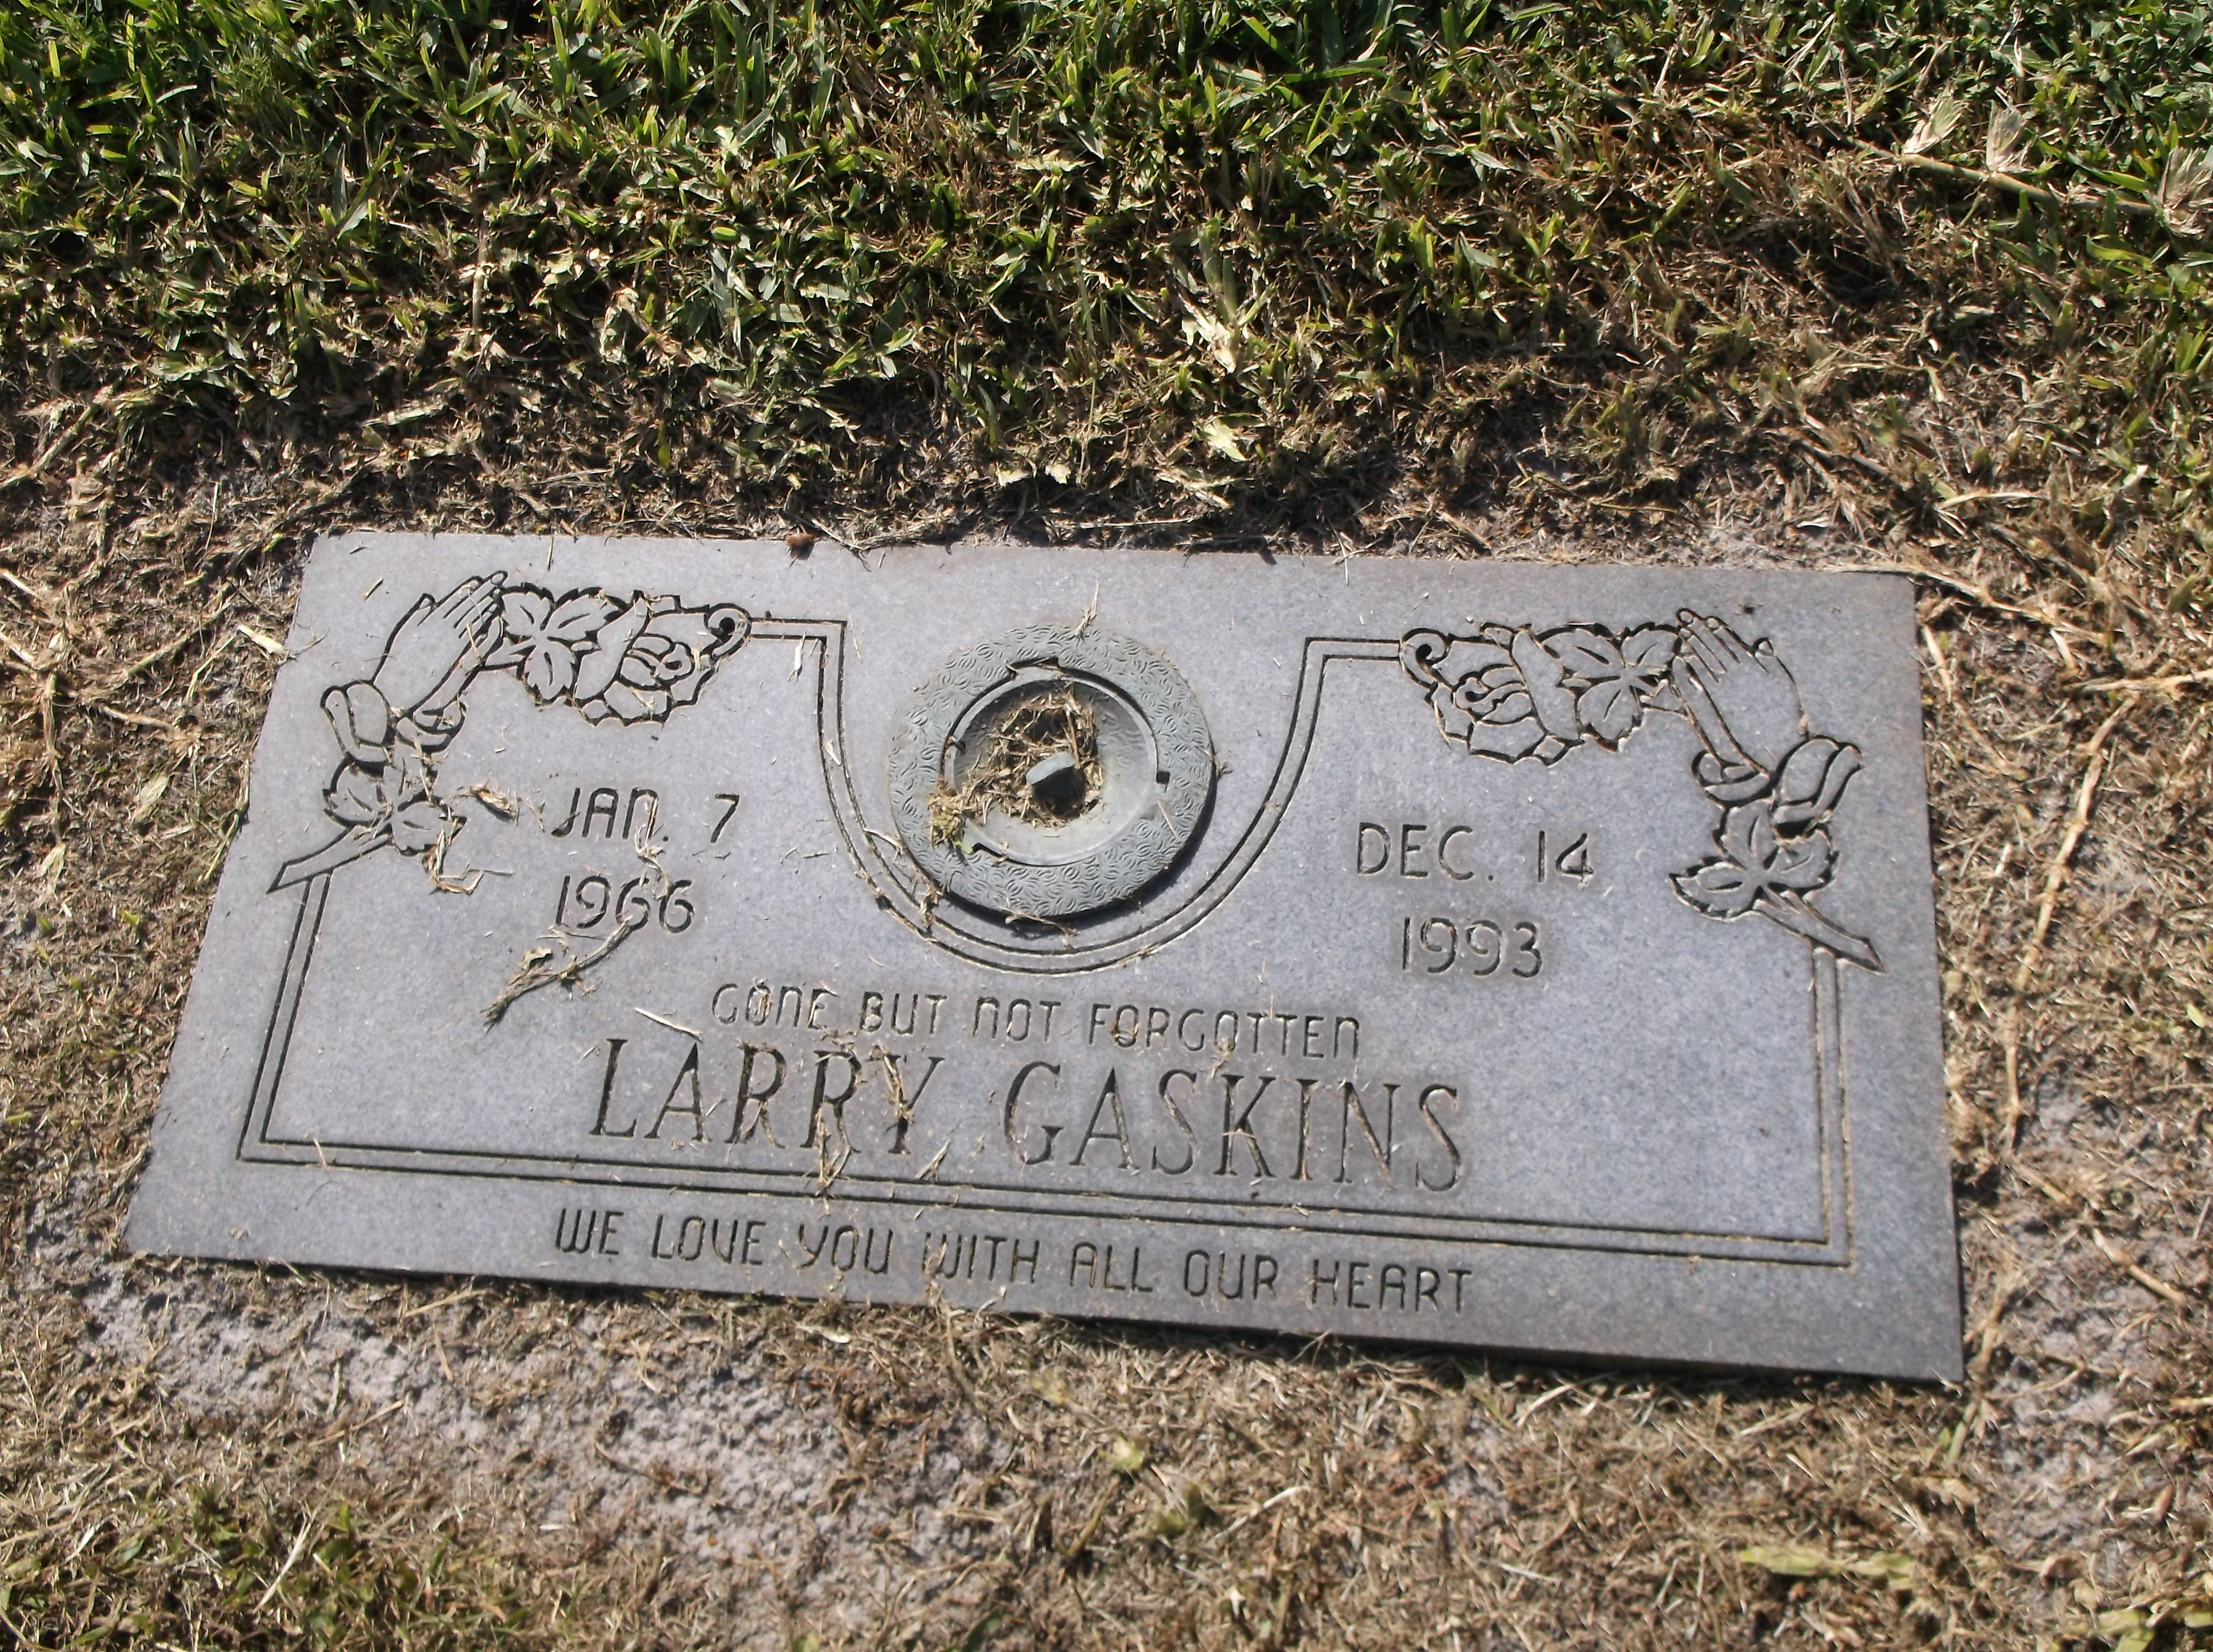 Larry Gaskins